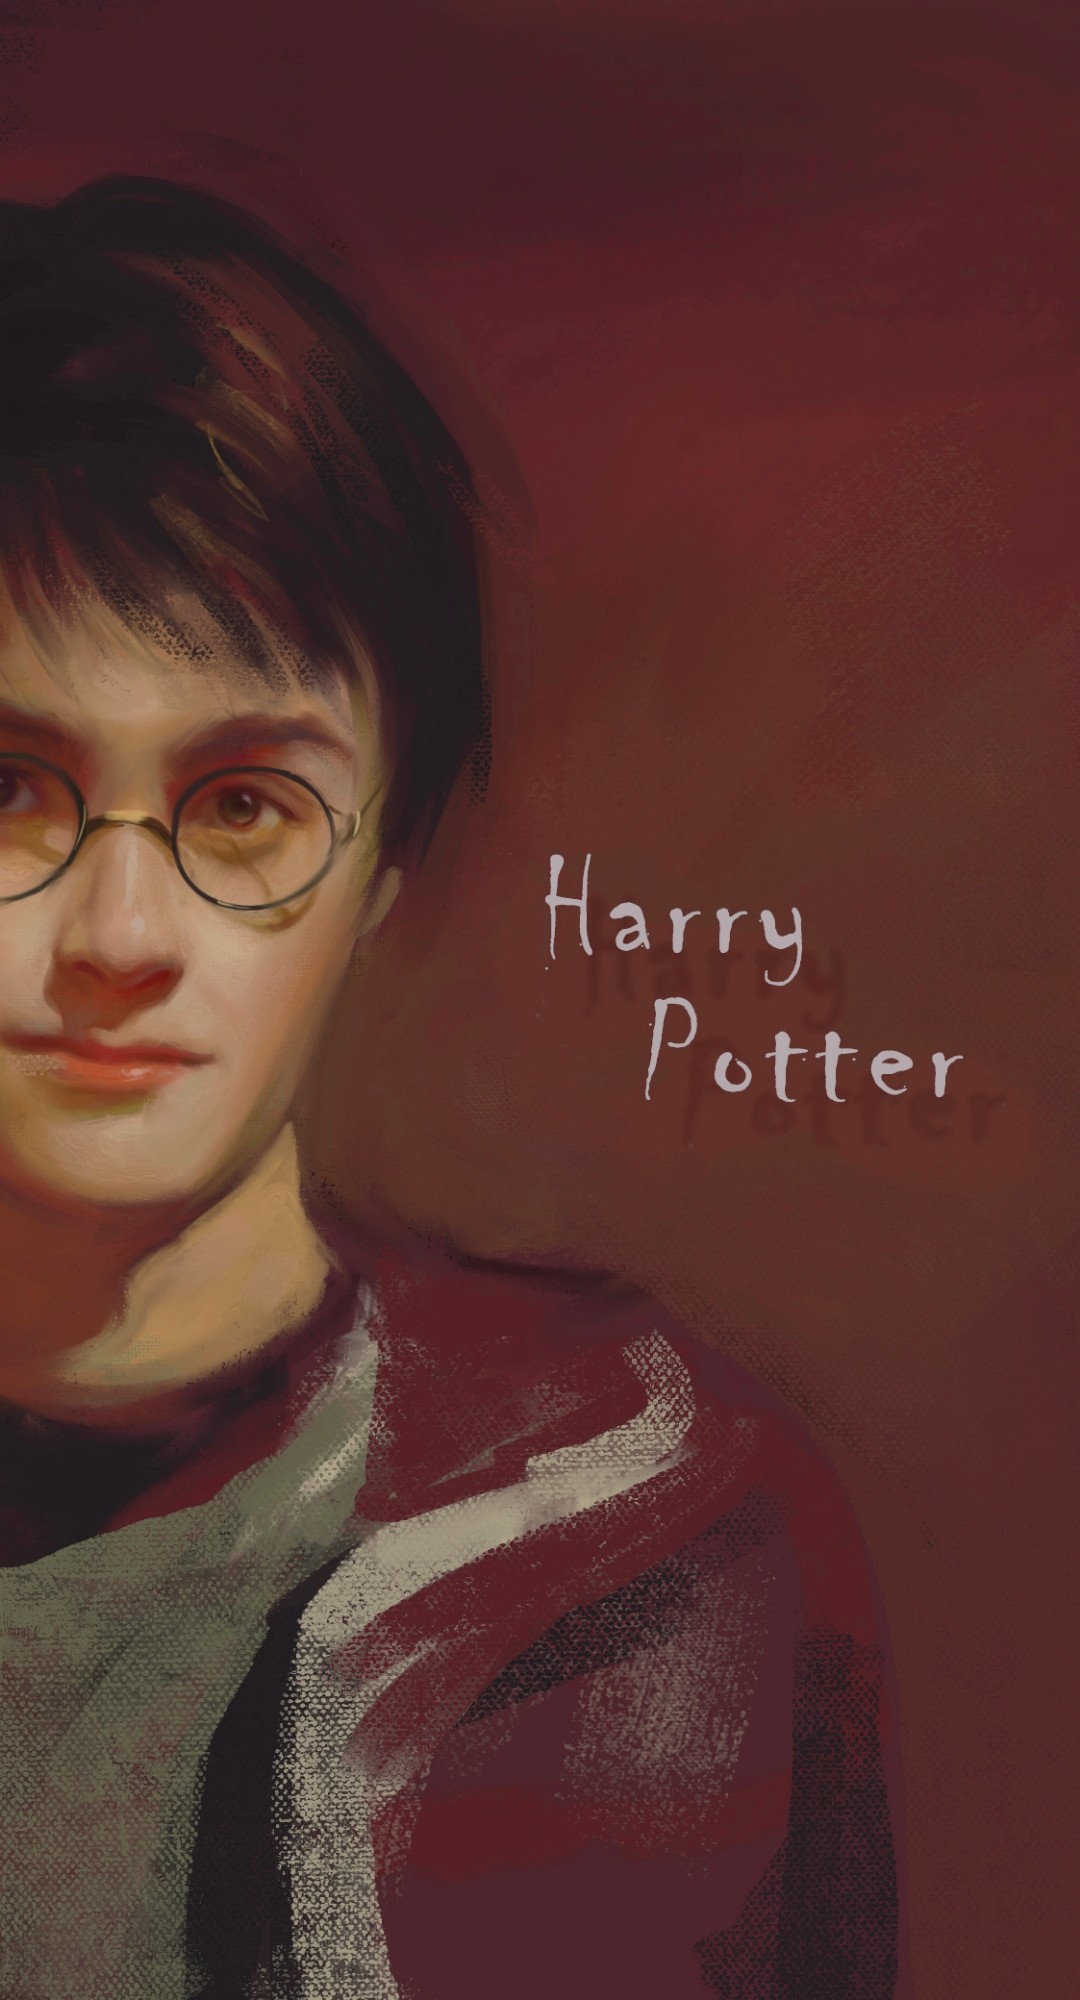 Harry Potter插画图片壁纸